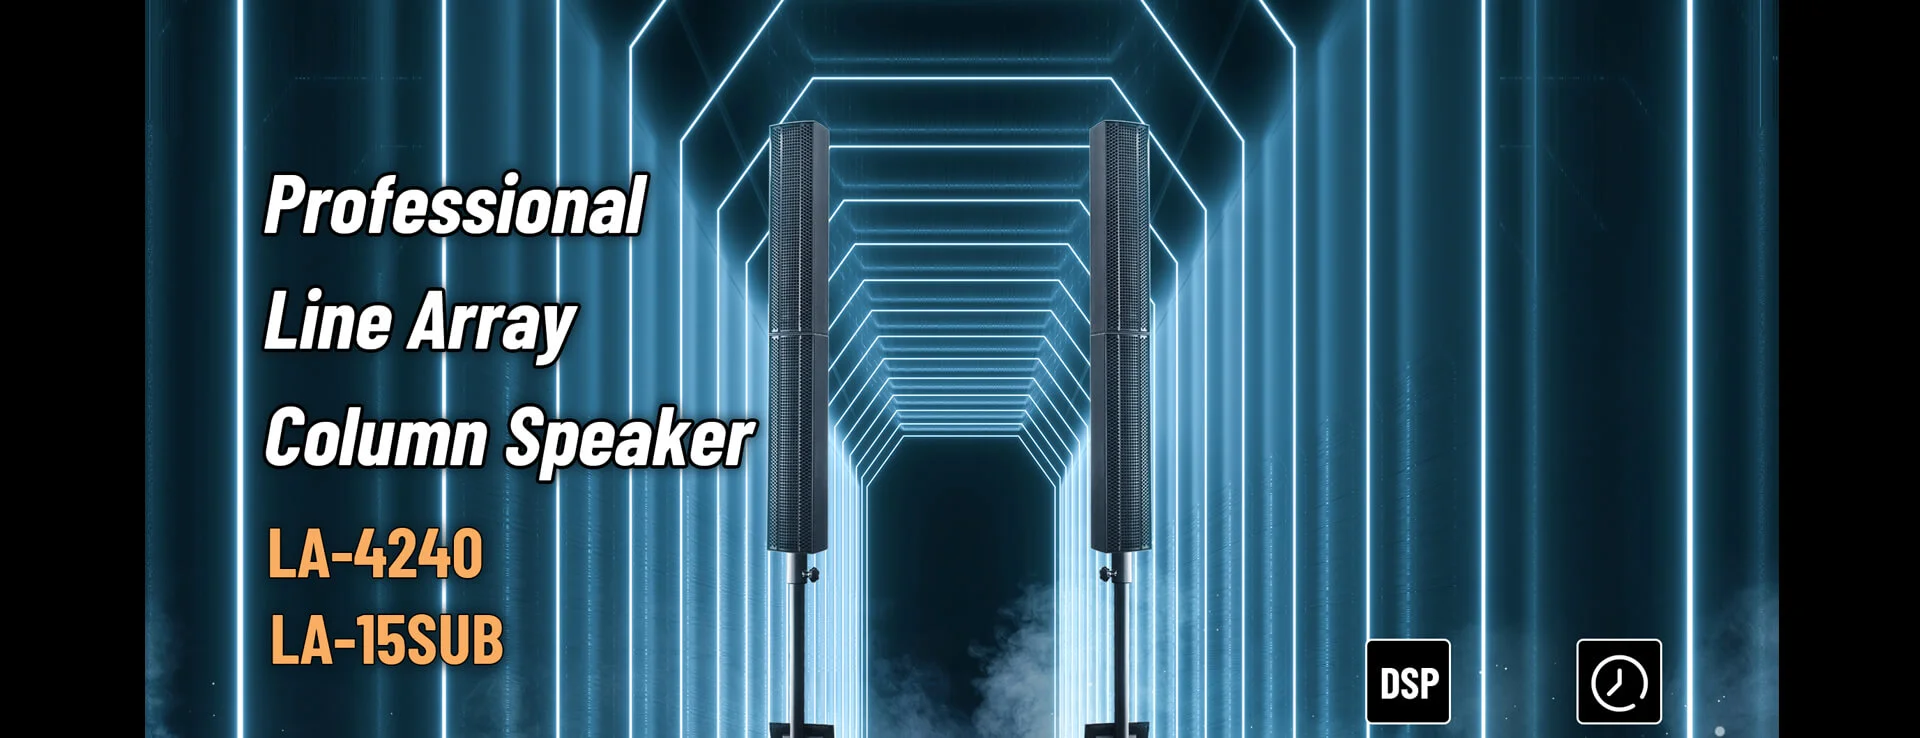 Professional Line Array Column Speaker